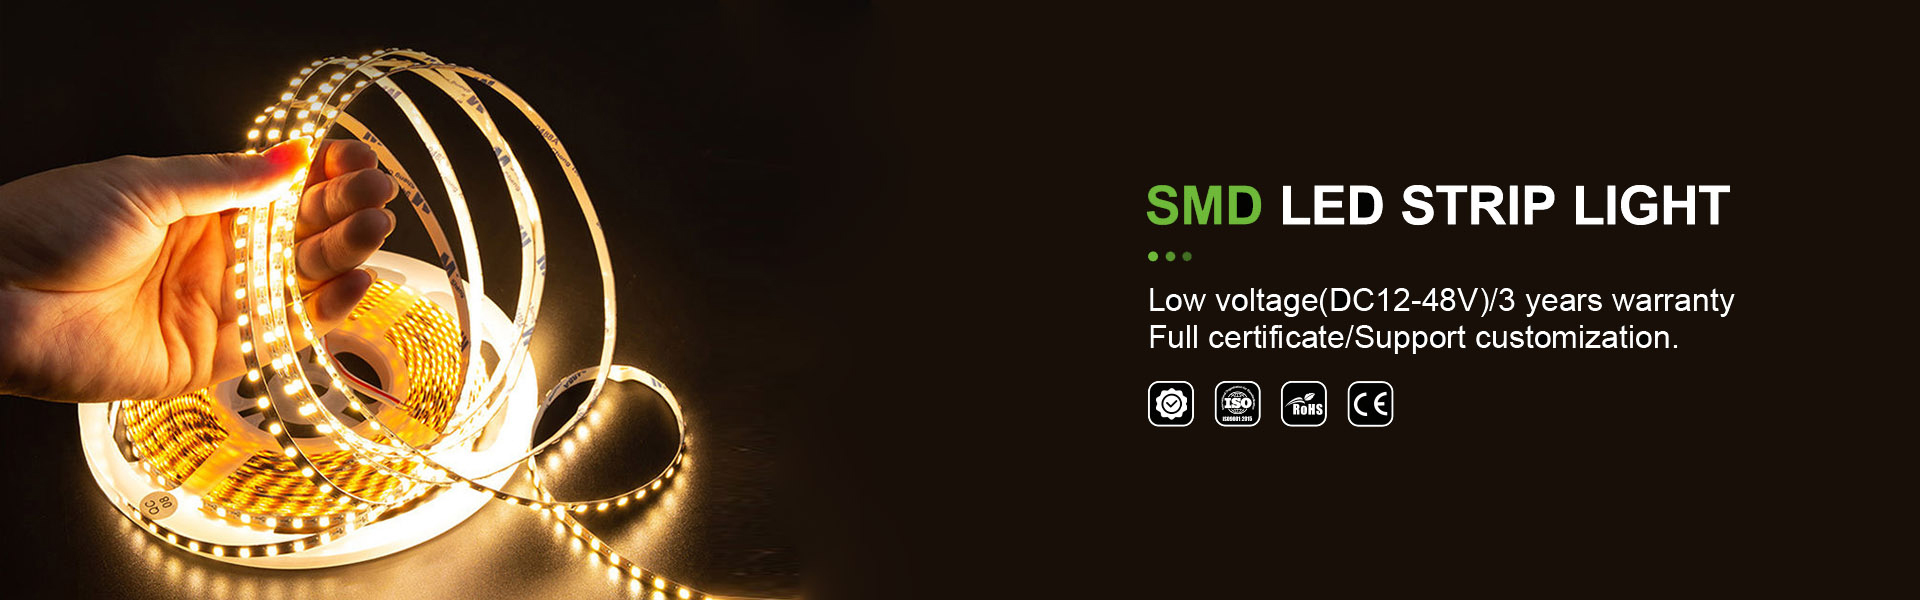 LEDストリップ照明、ネオンライト、コブストリップ照明,AWS (SZ) Technology Company Limited